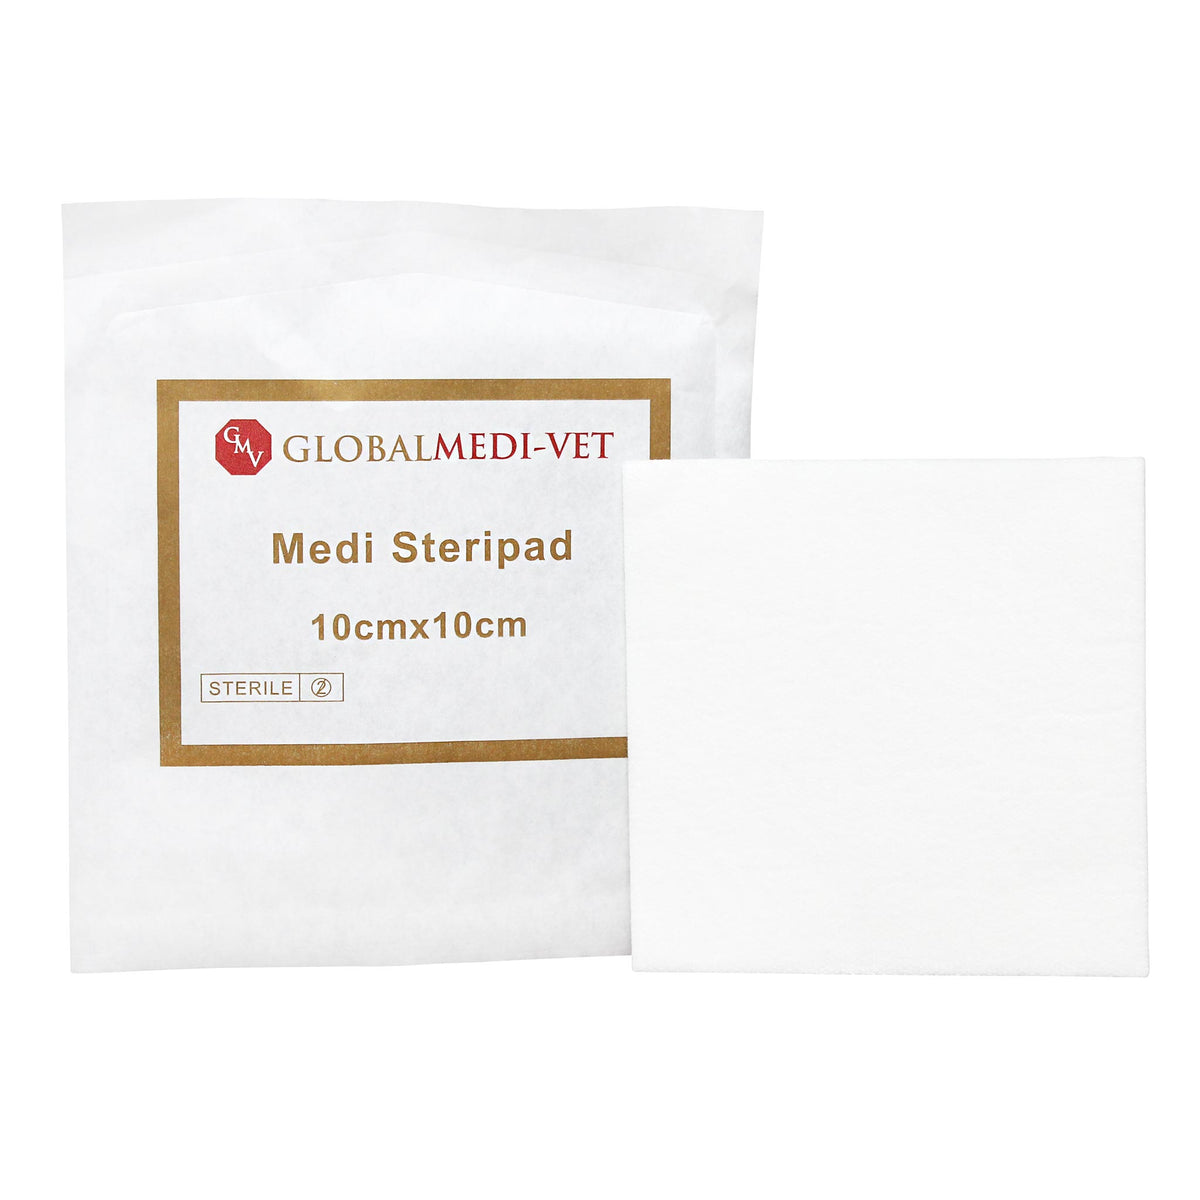 GMV Medi-Steripad Sterile Wound Dressing Pad